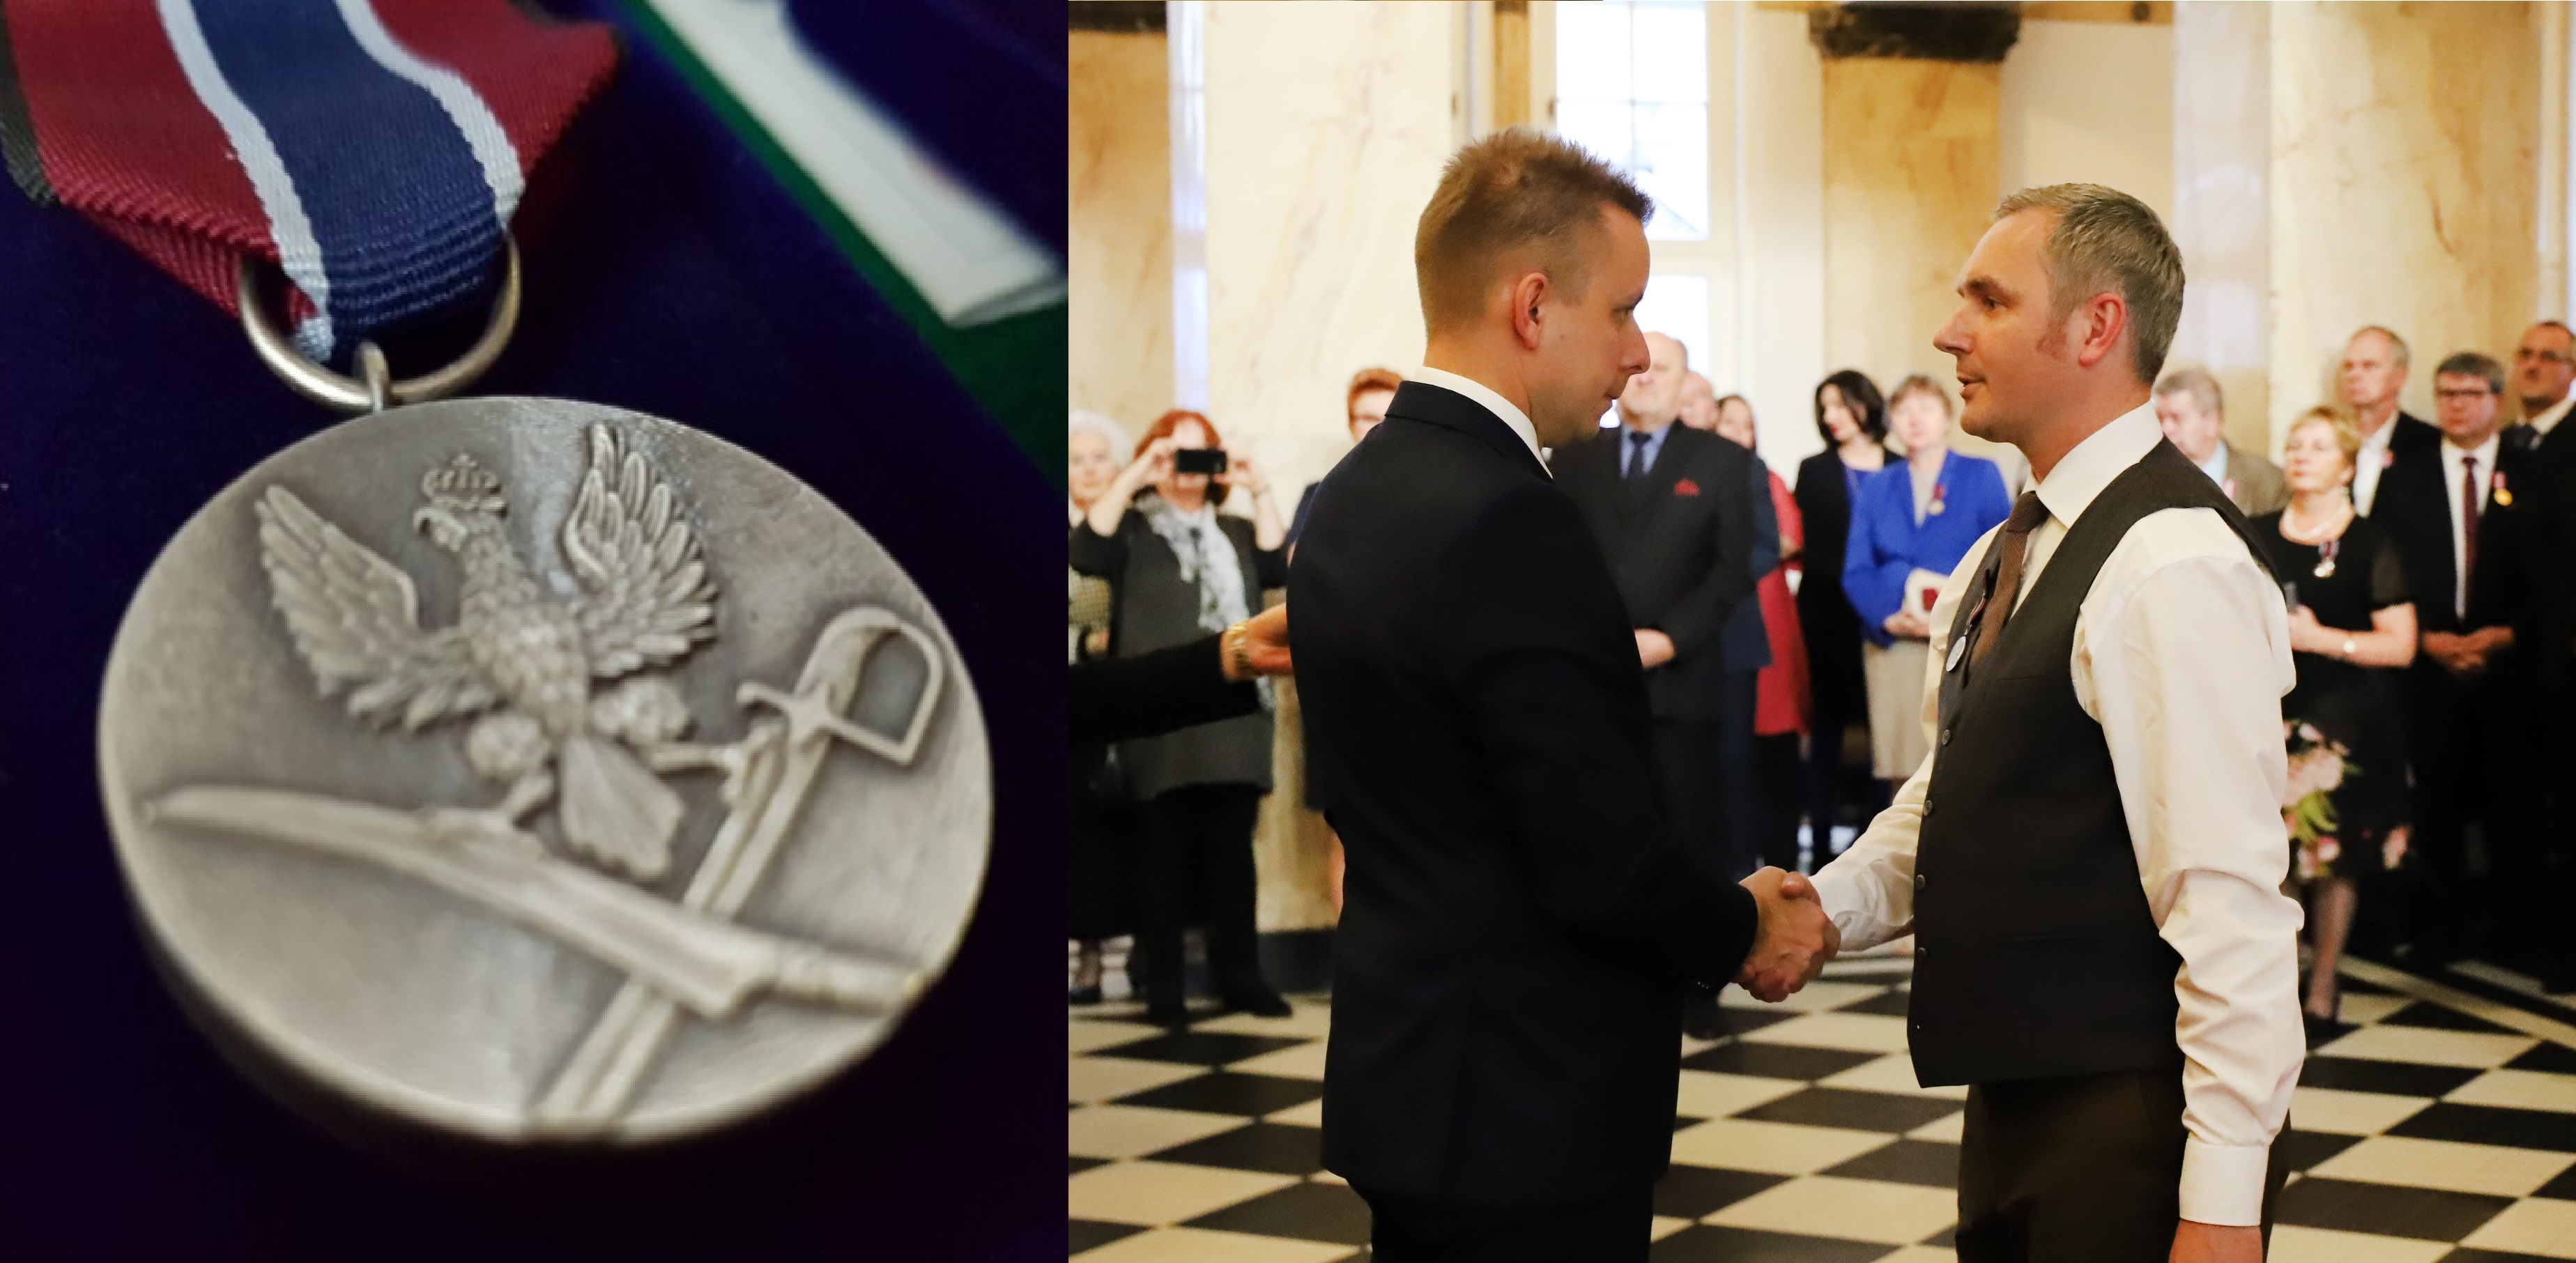 Gliwiczanin z medalem „Pro Patria”